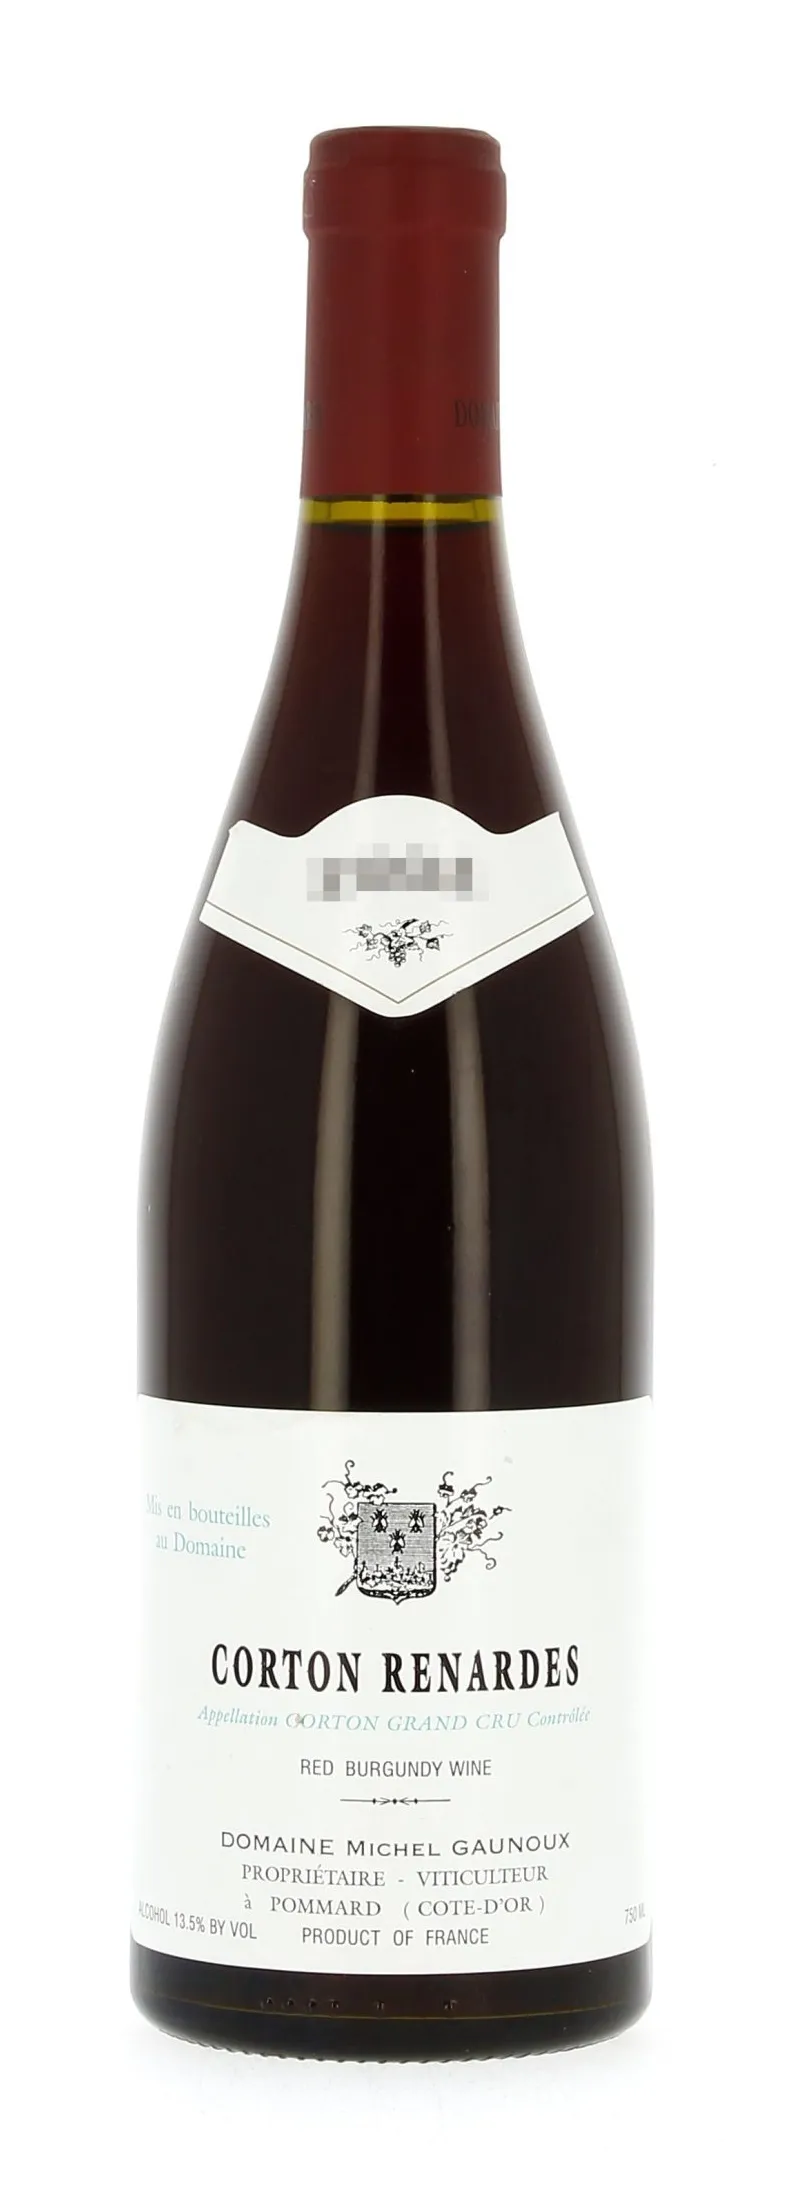 Bottle of Domaine Michel Gaunoux Corton Renardeswith label visible